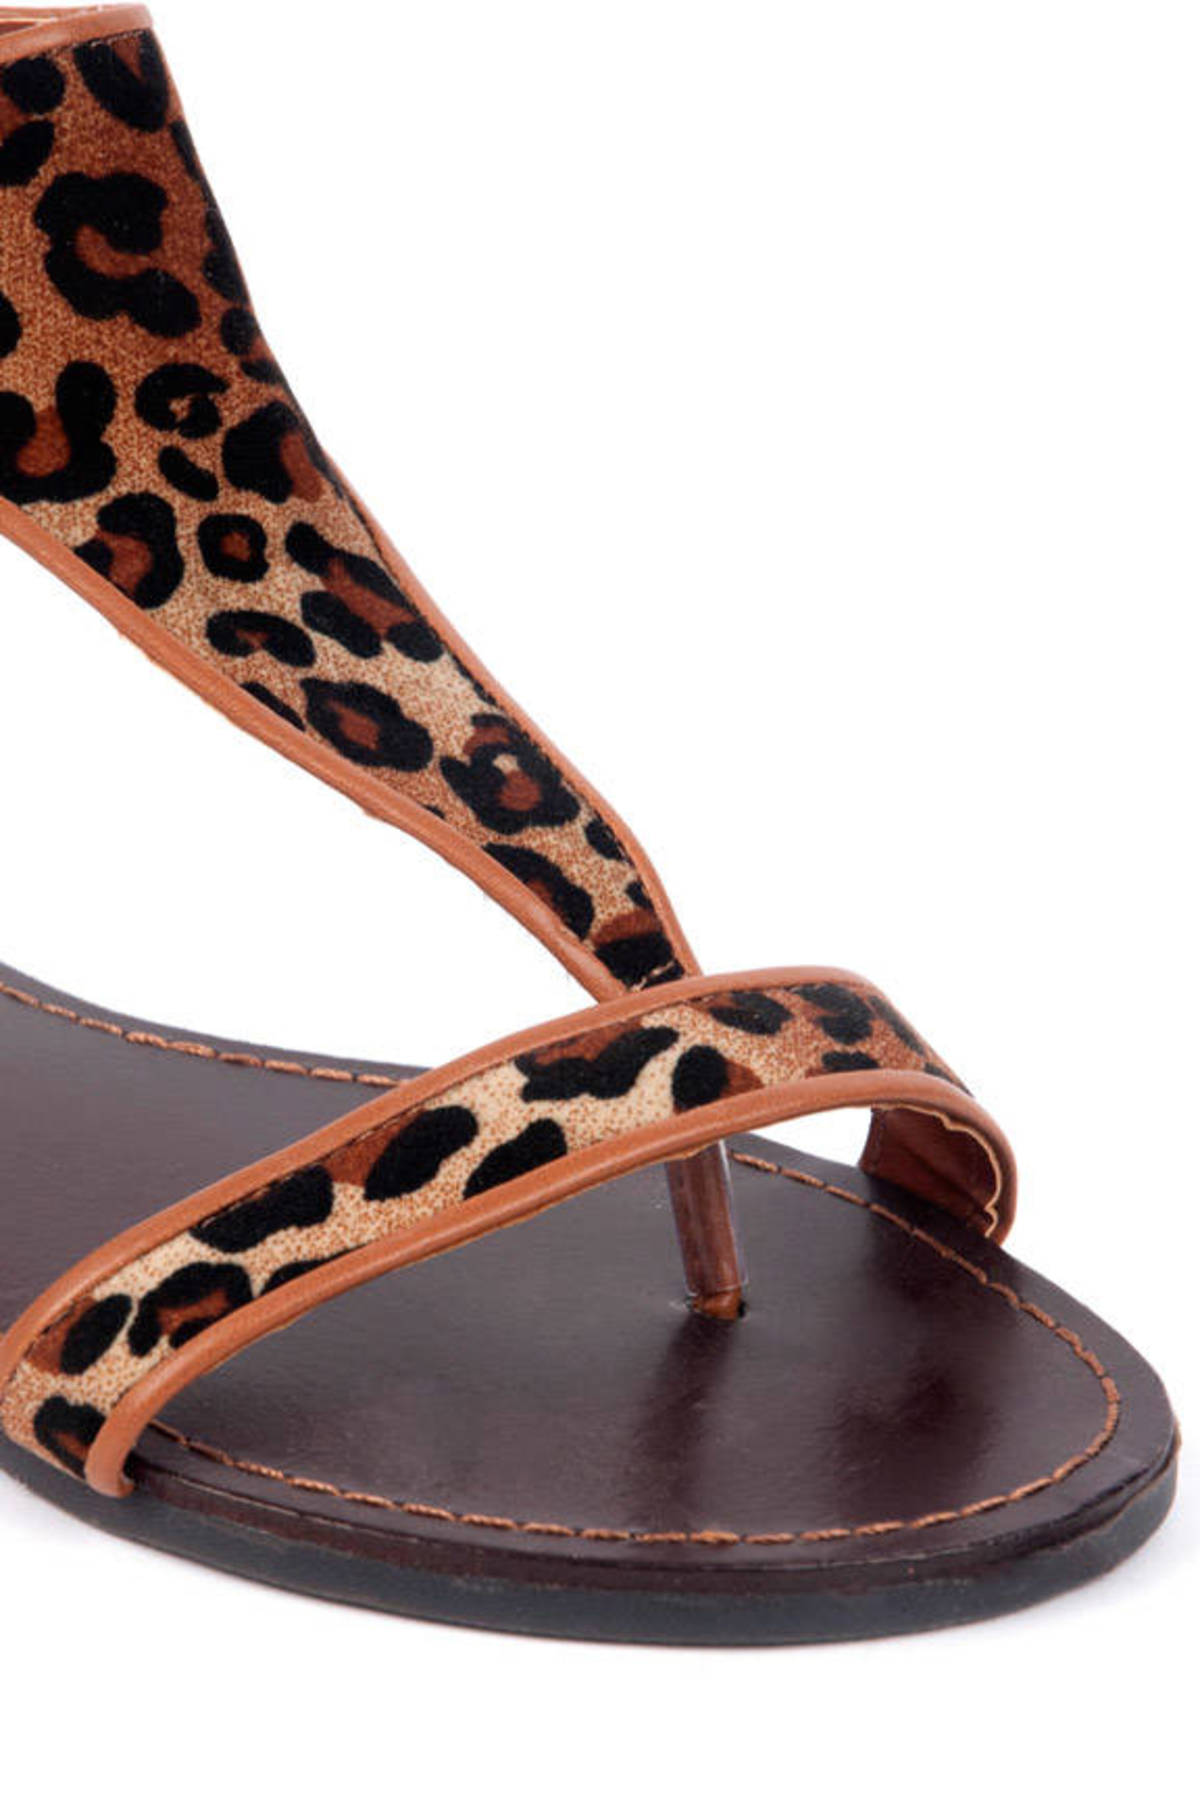 Bella Leopard Sandals in Leopard - $12 | Tobi US